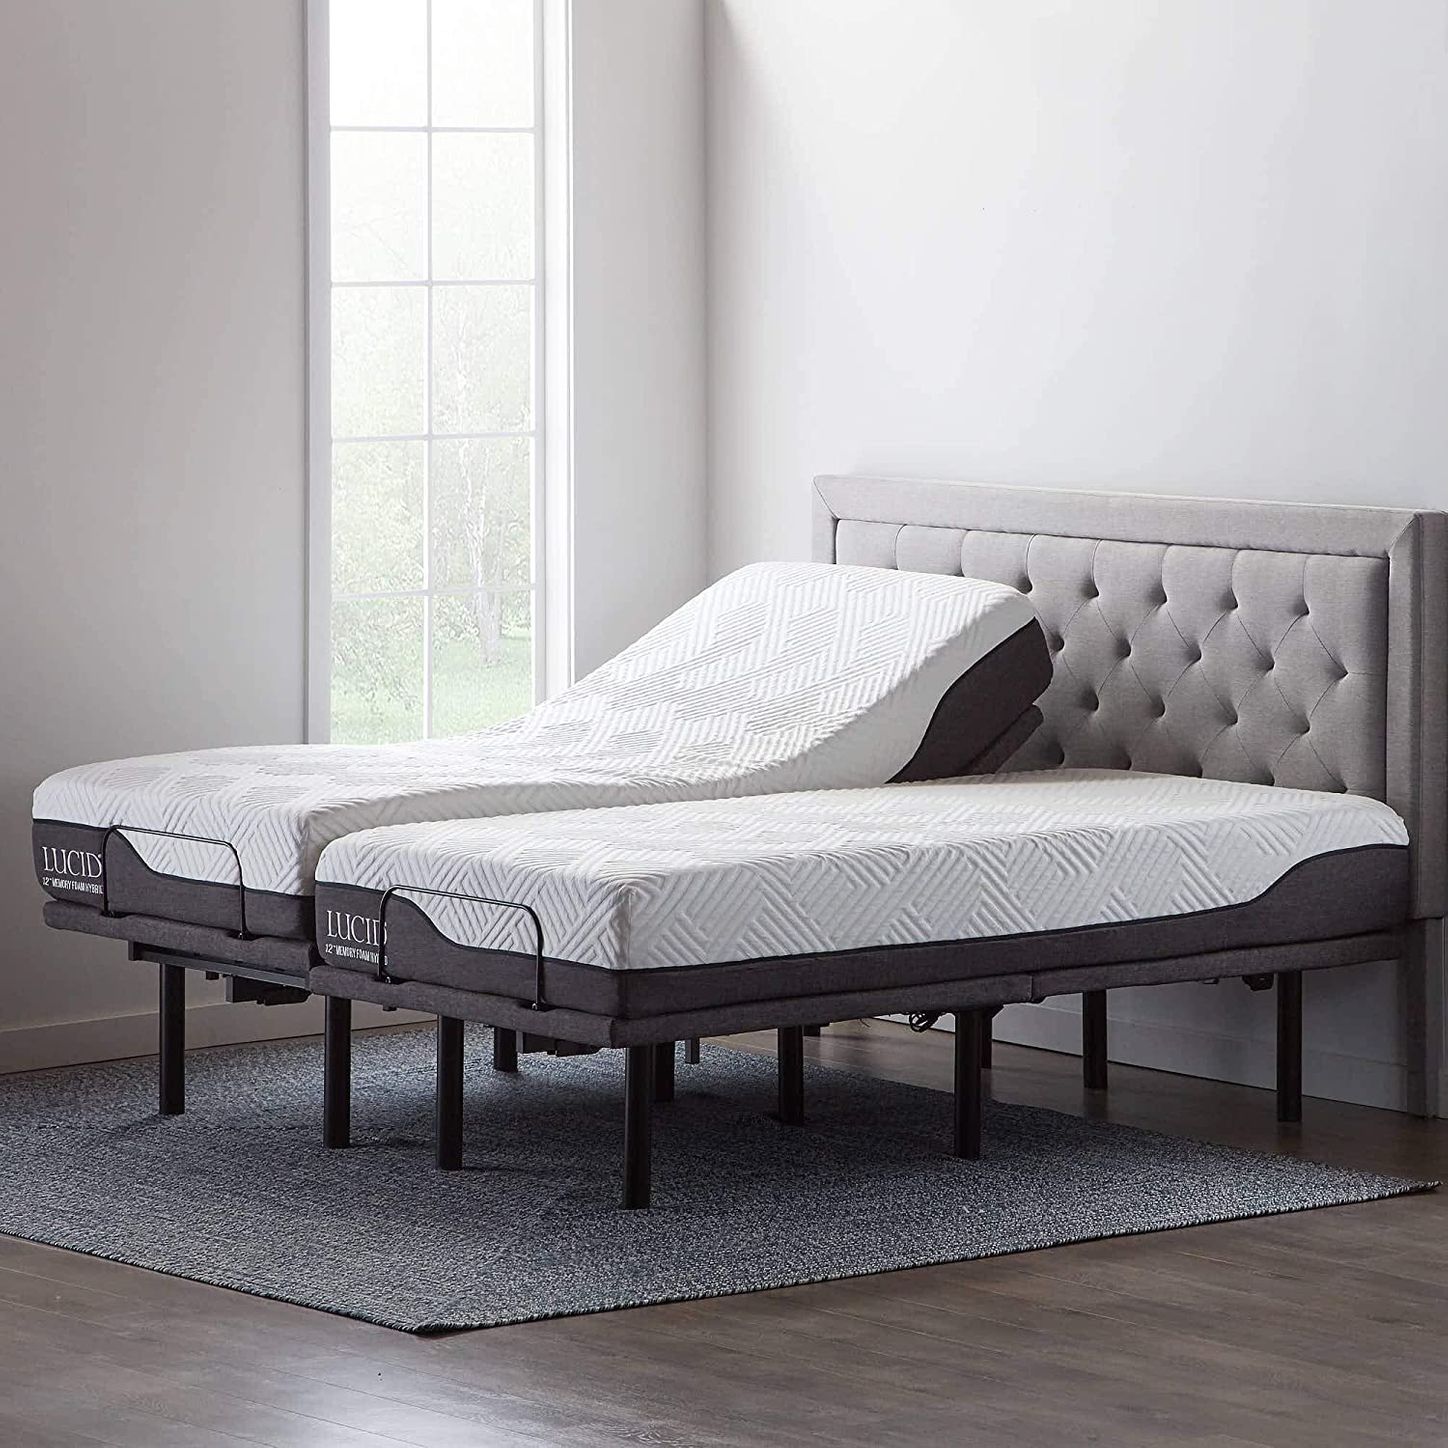 10 Best Adjustable Bed Bases 2021 The, Split King Adjustable Bed With Mattress